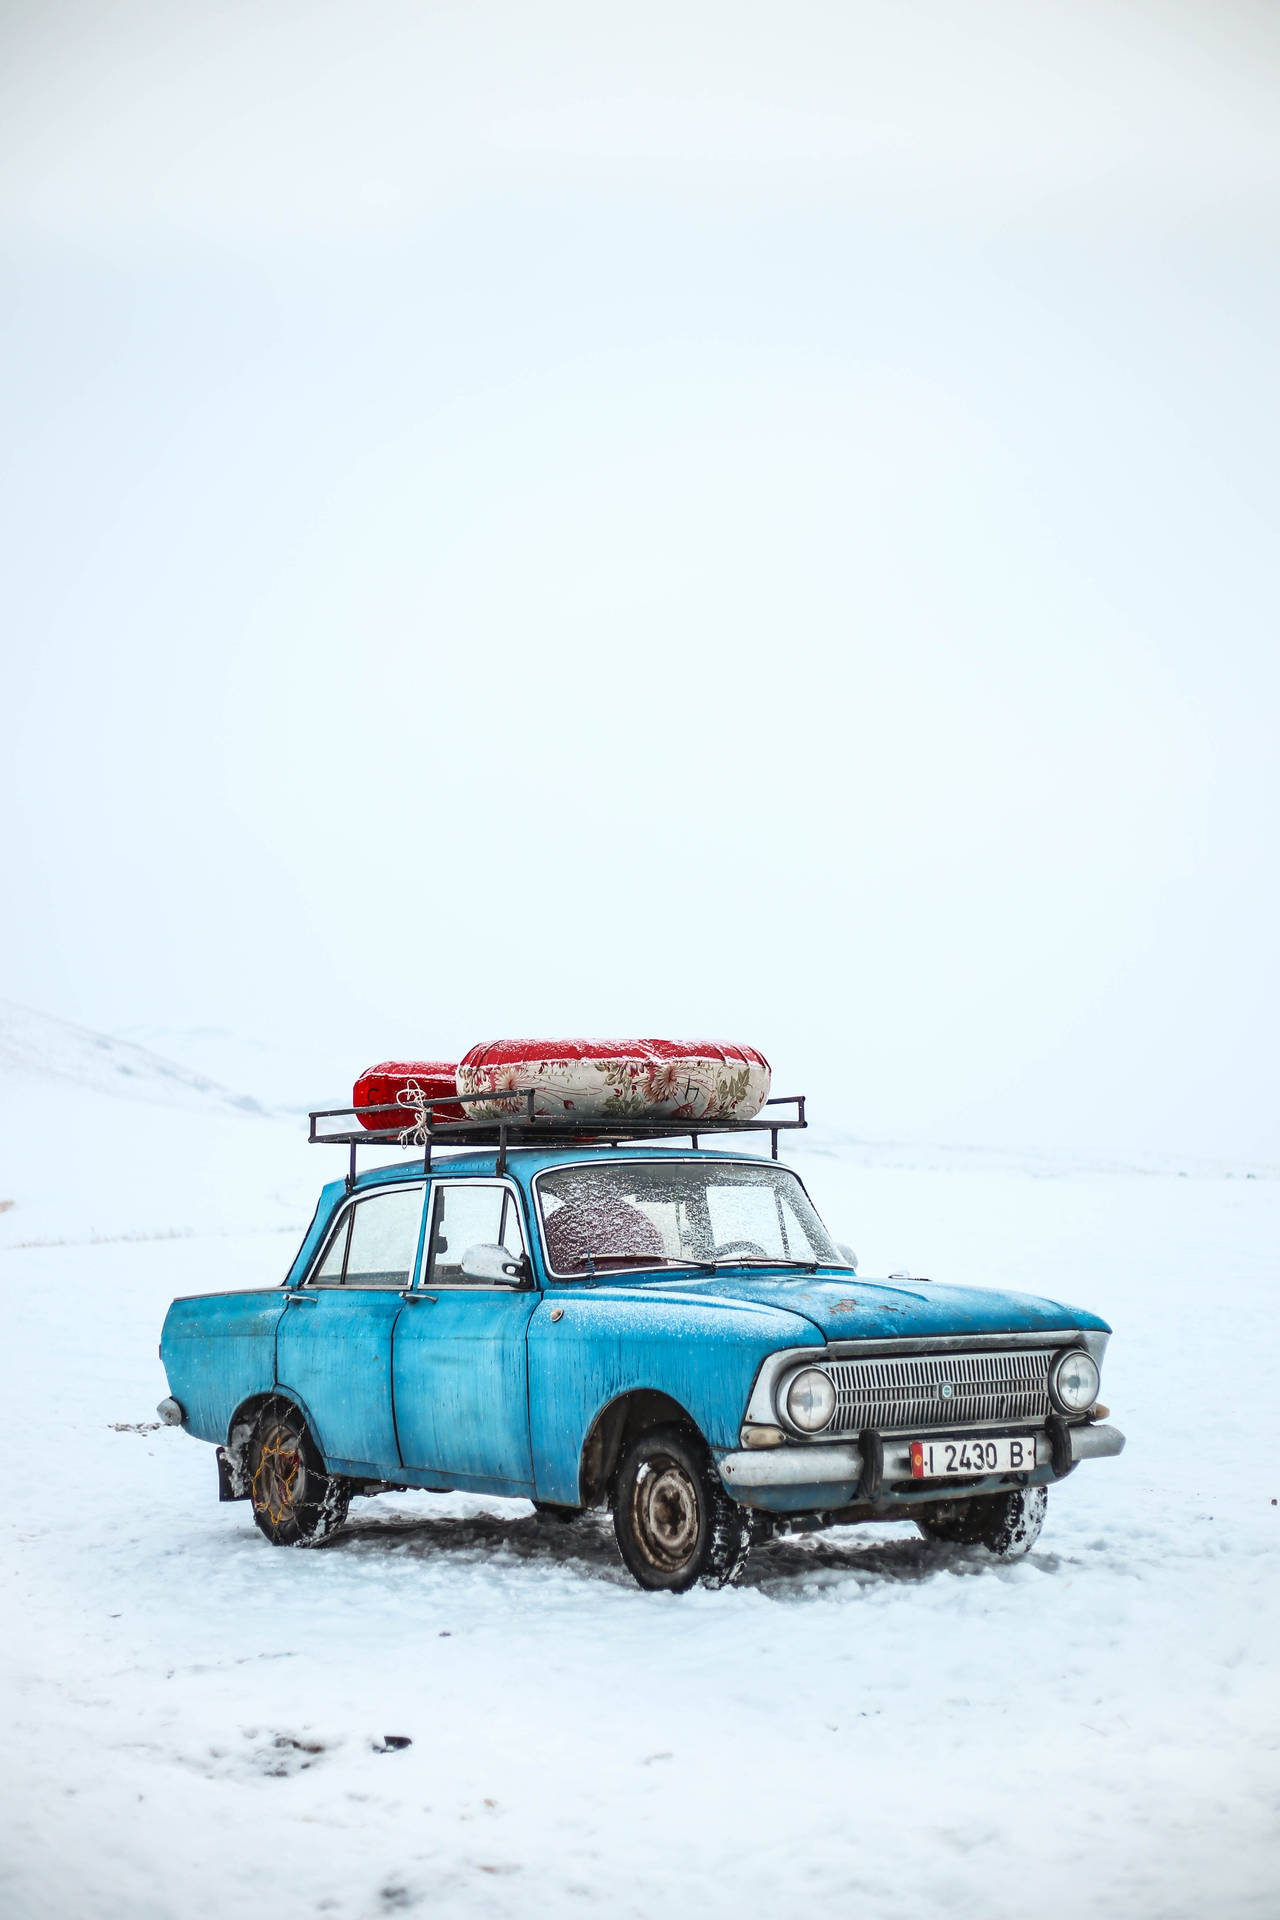 Kyrgyzstan Winter Blue Car Picture